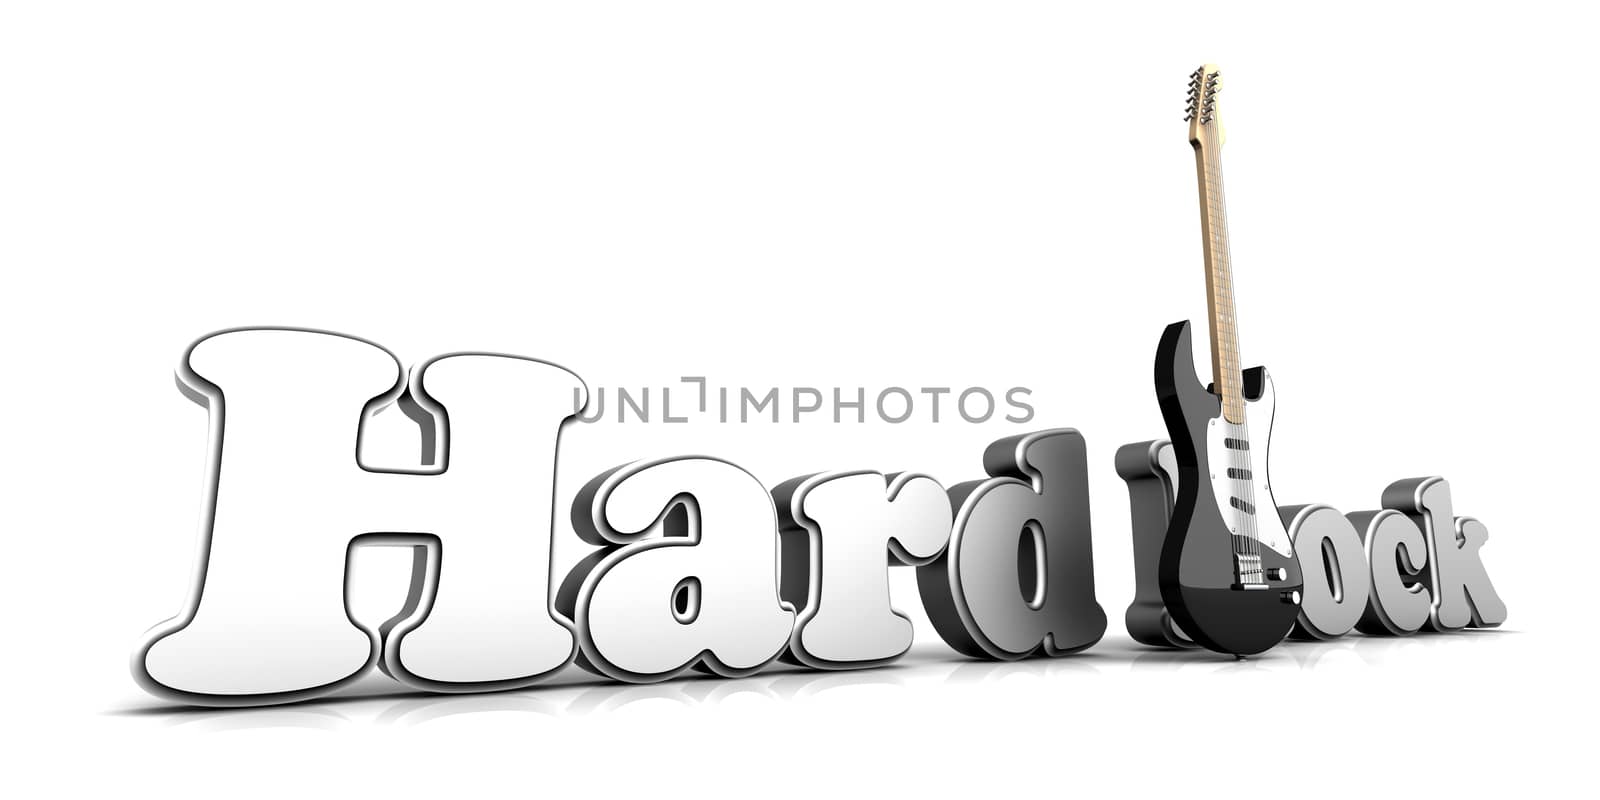 Hardrock word with a guitar. 3D Illustration.